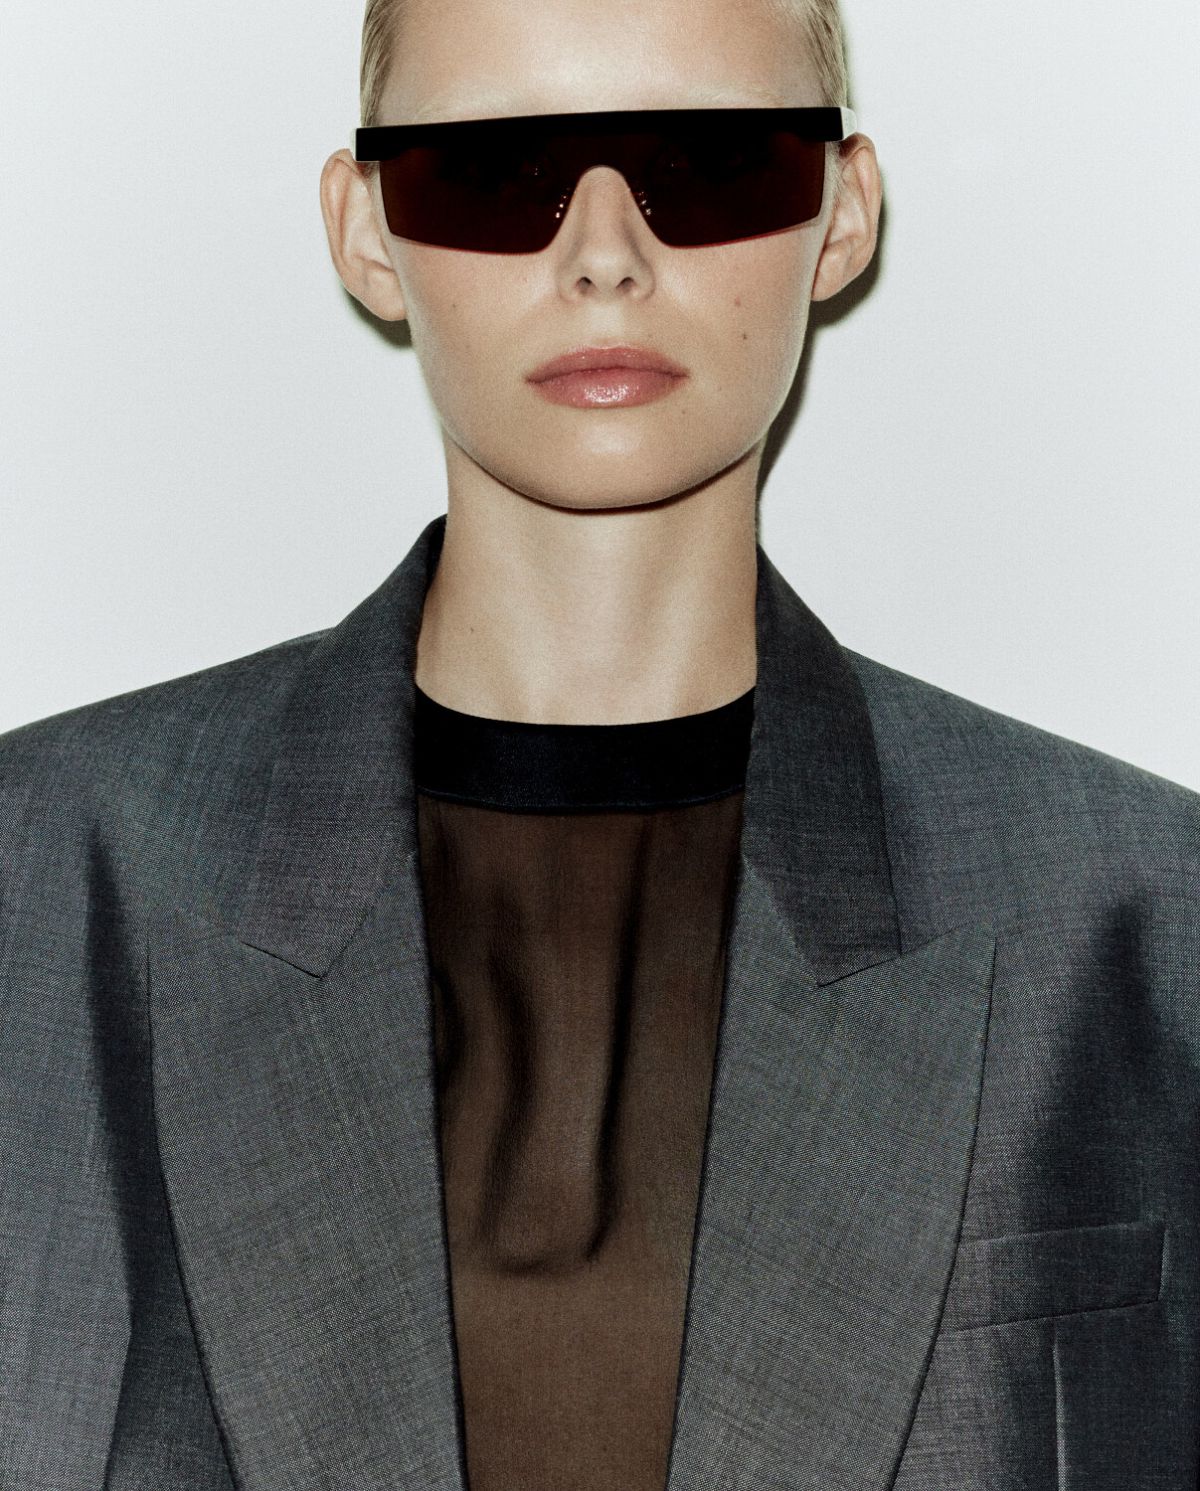 Tara Halliwell in Nanushka Sunglasses by Georgia Devey Smith for Vogue Poland 90s Style Fashion Editorials